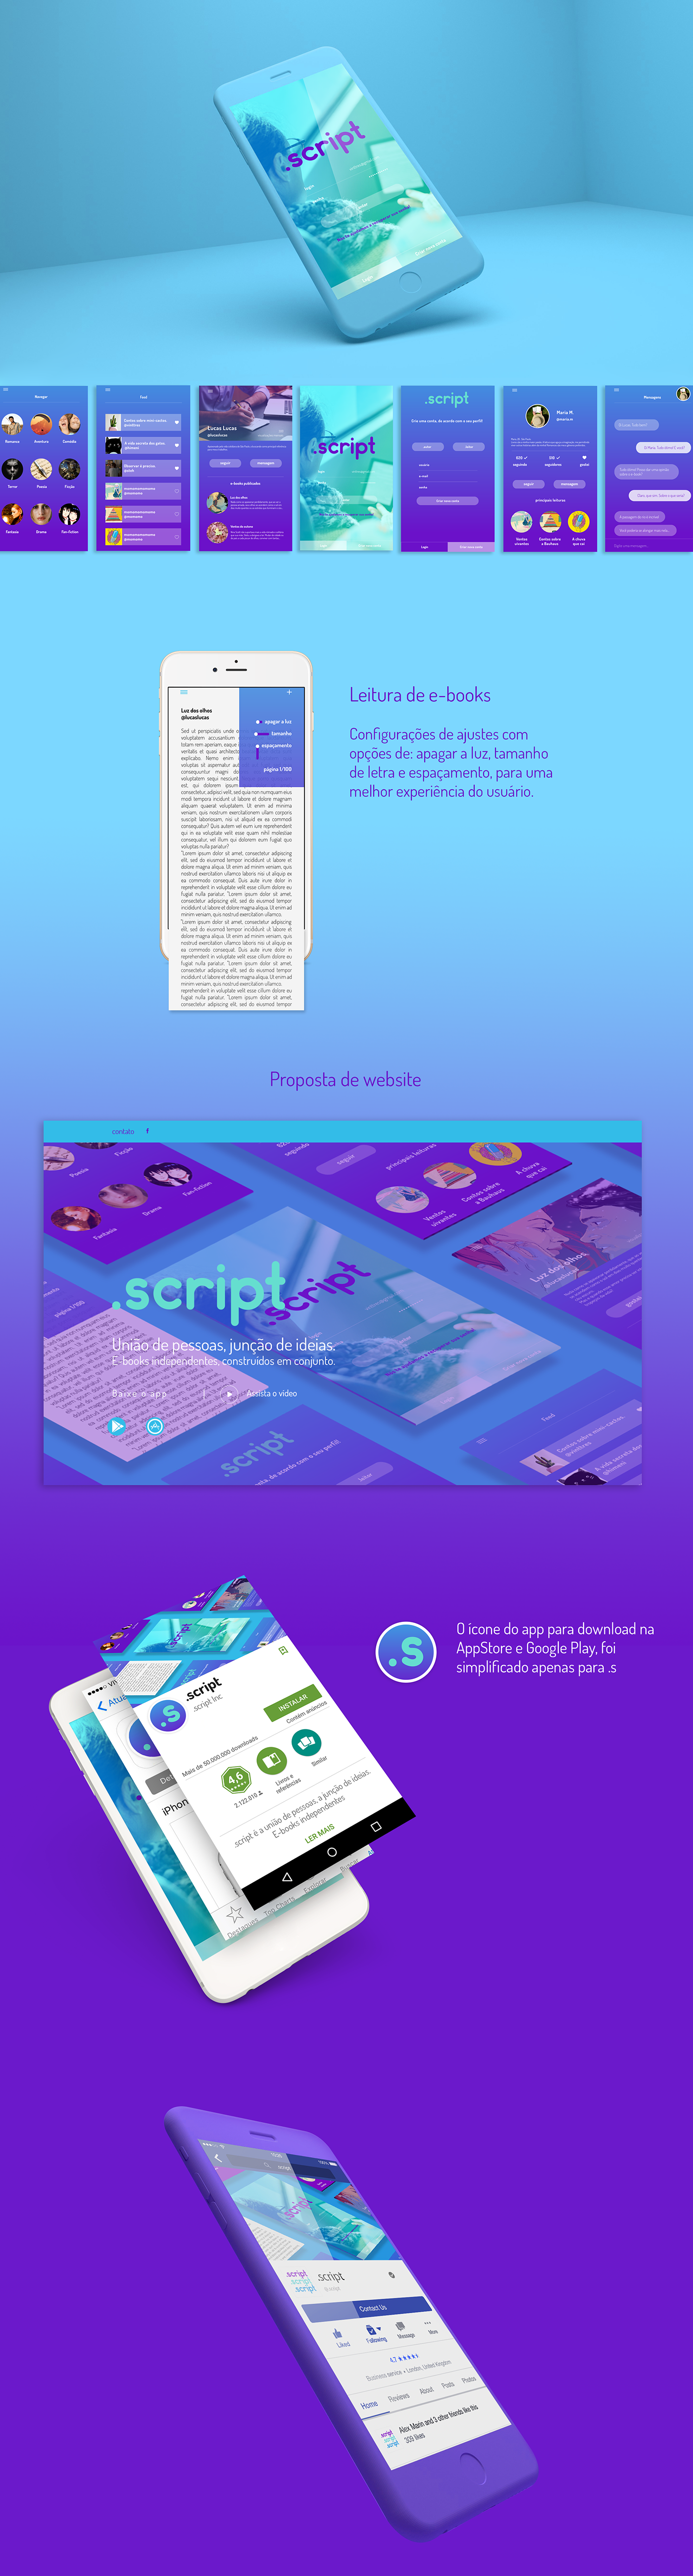 app Platform Interface design interfacedesign